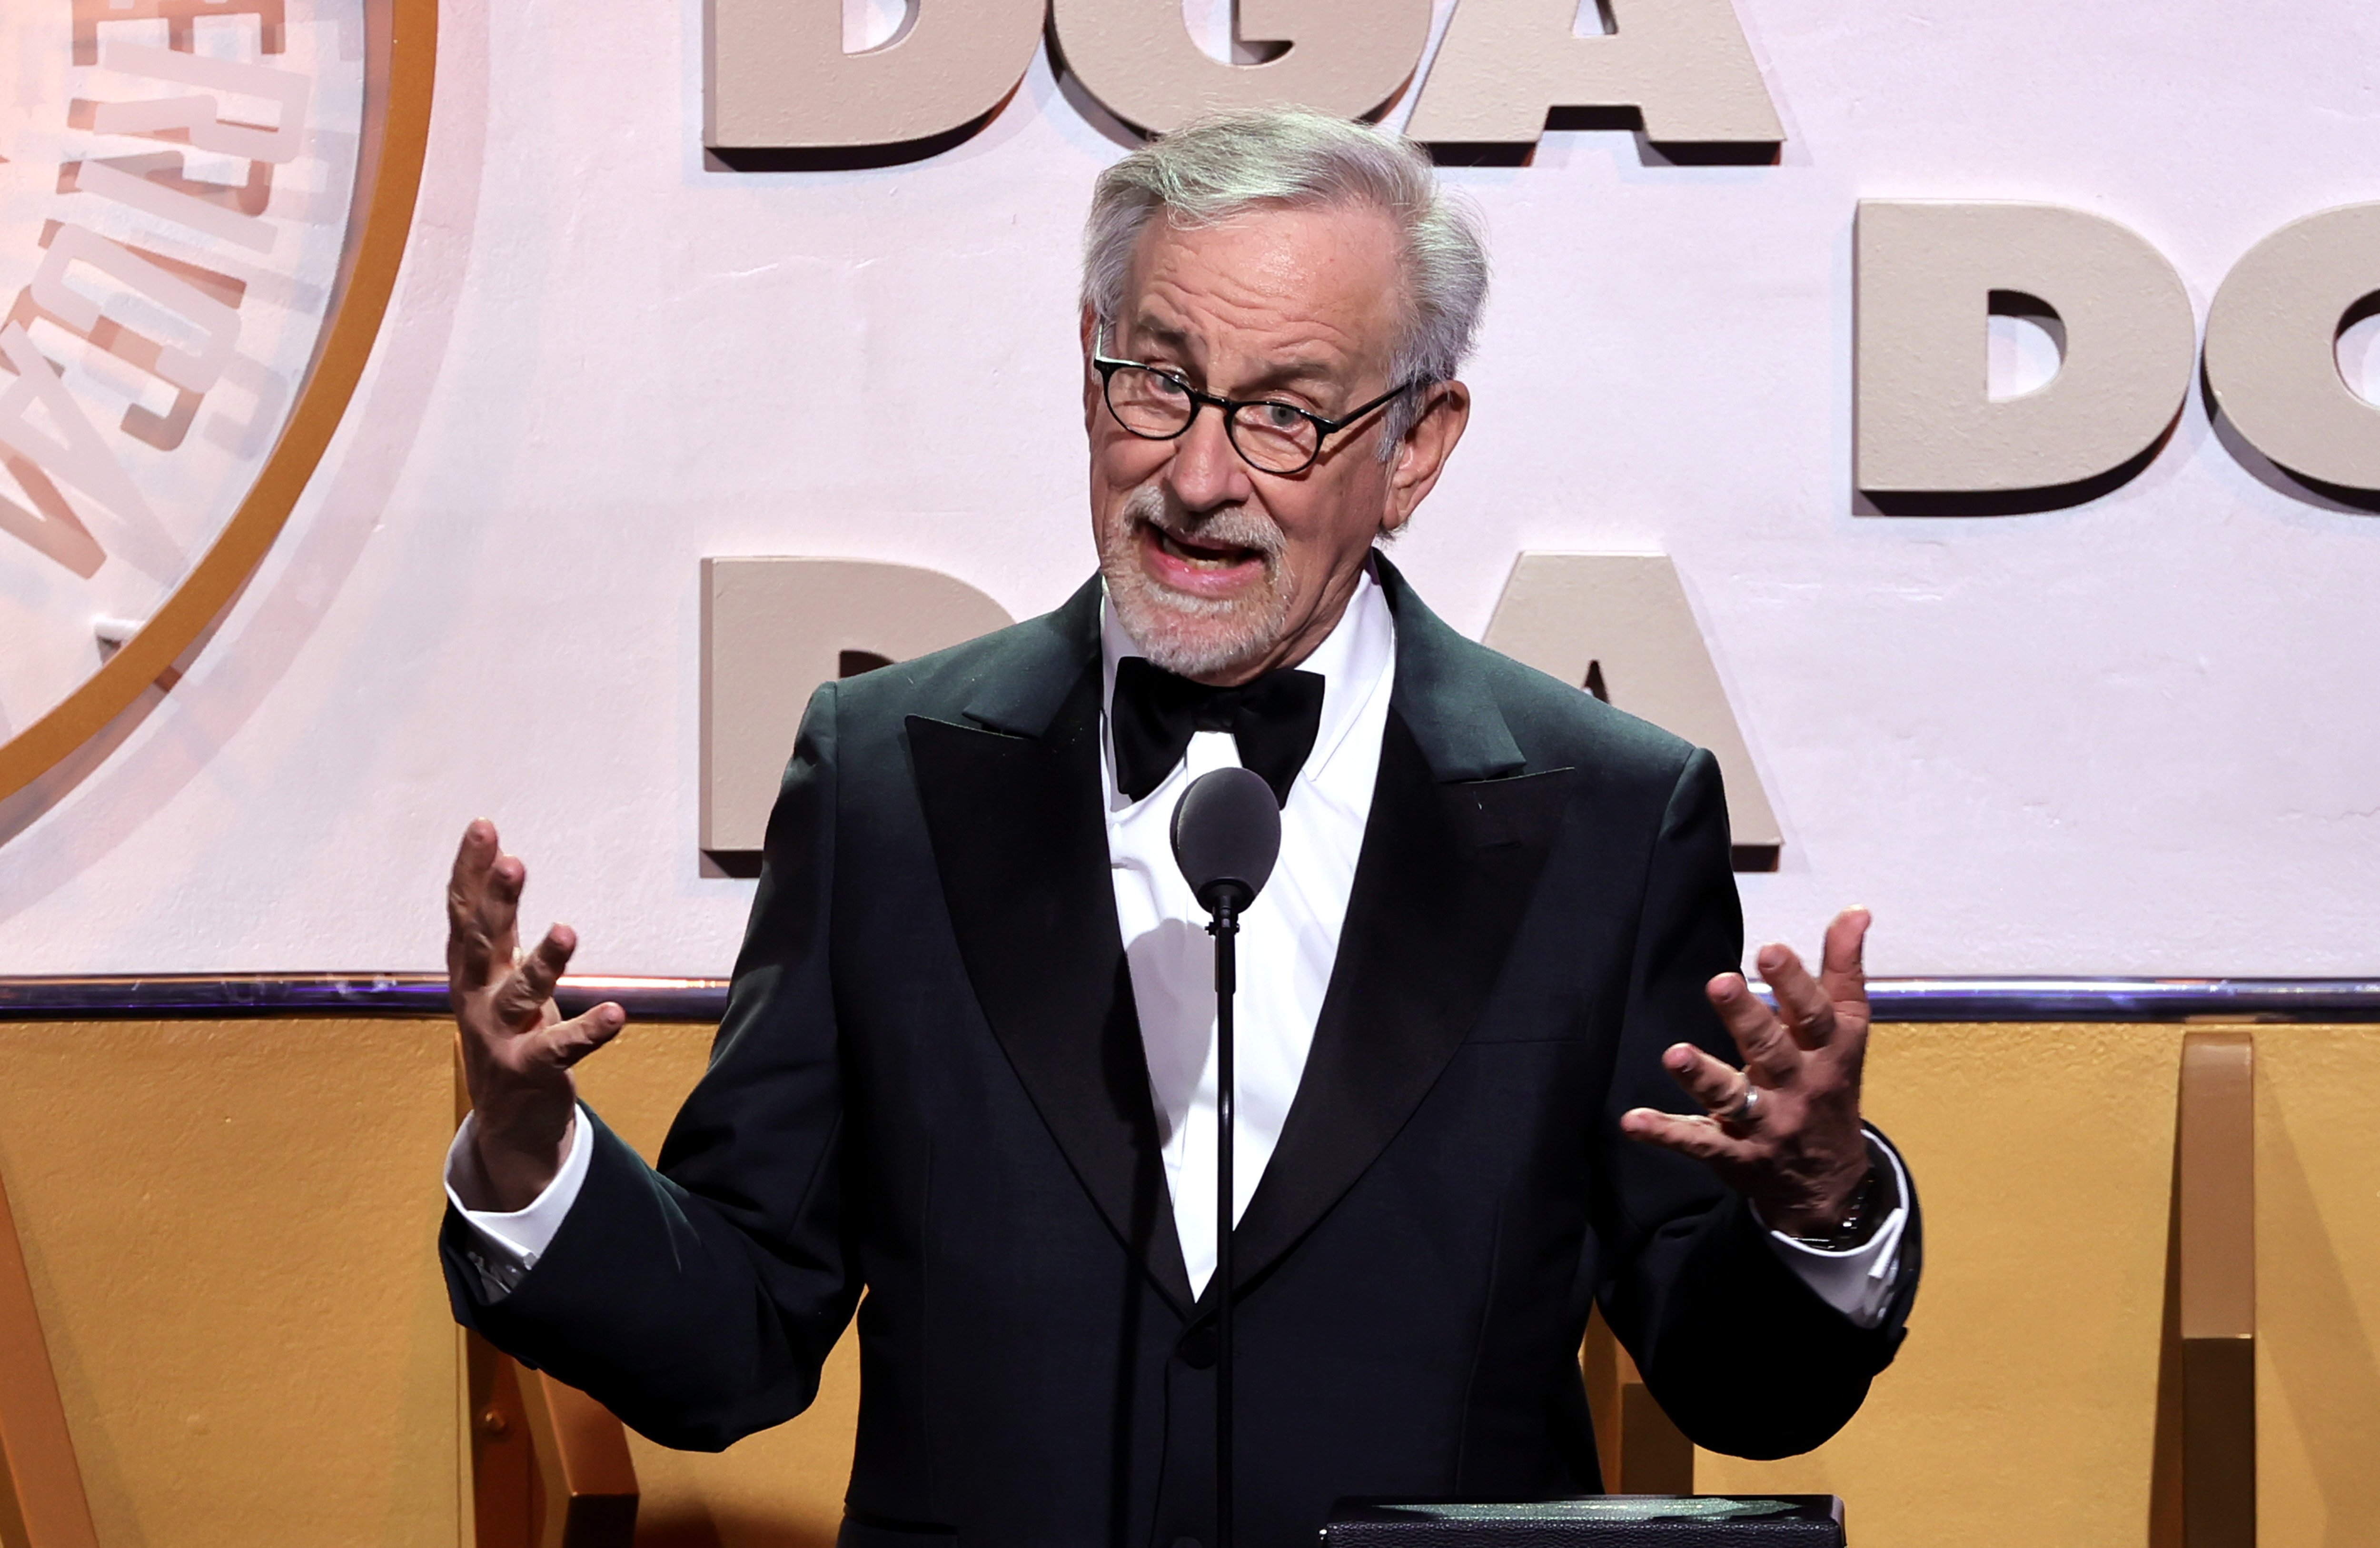 Steven Spielberg speaks at the DGA Awards for West Side Story